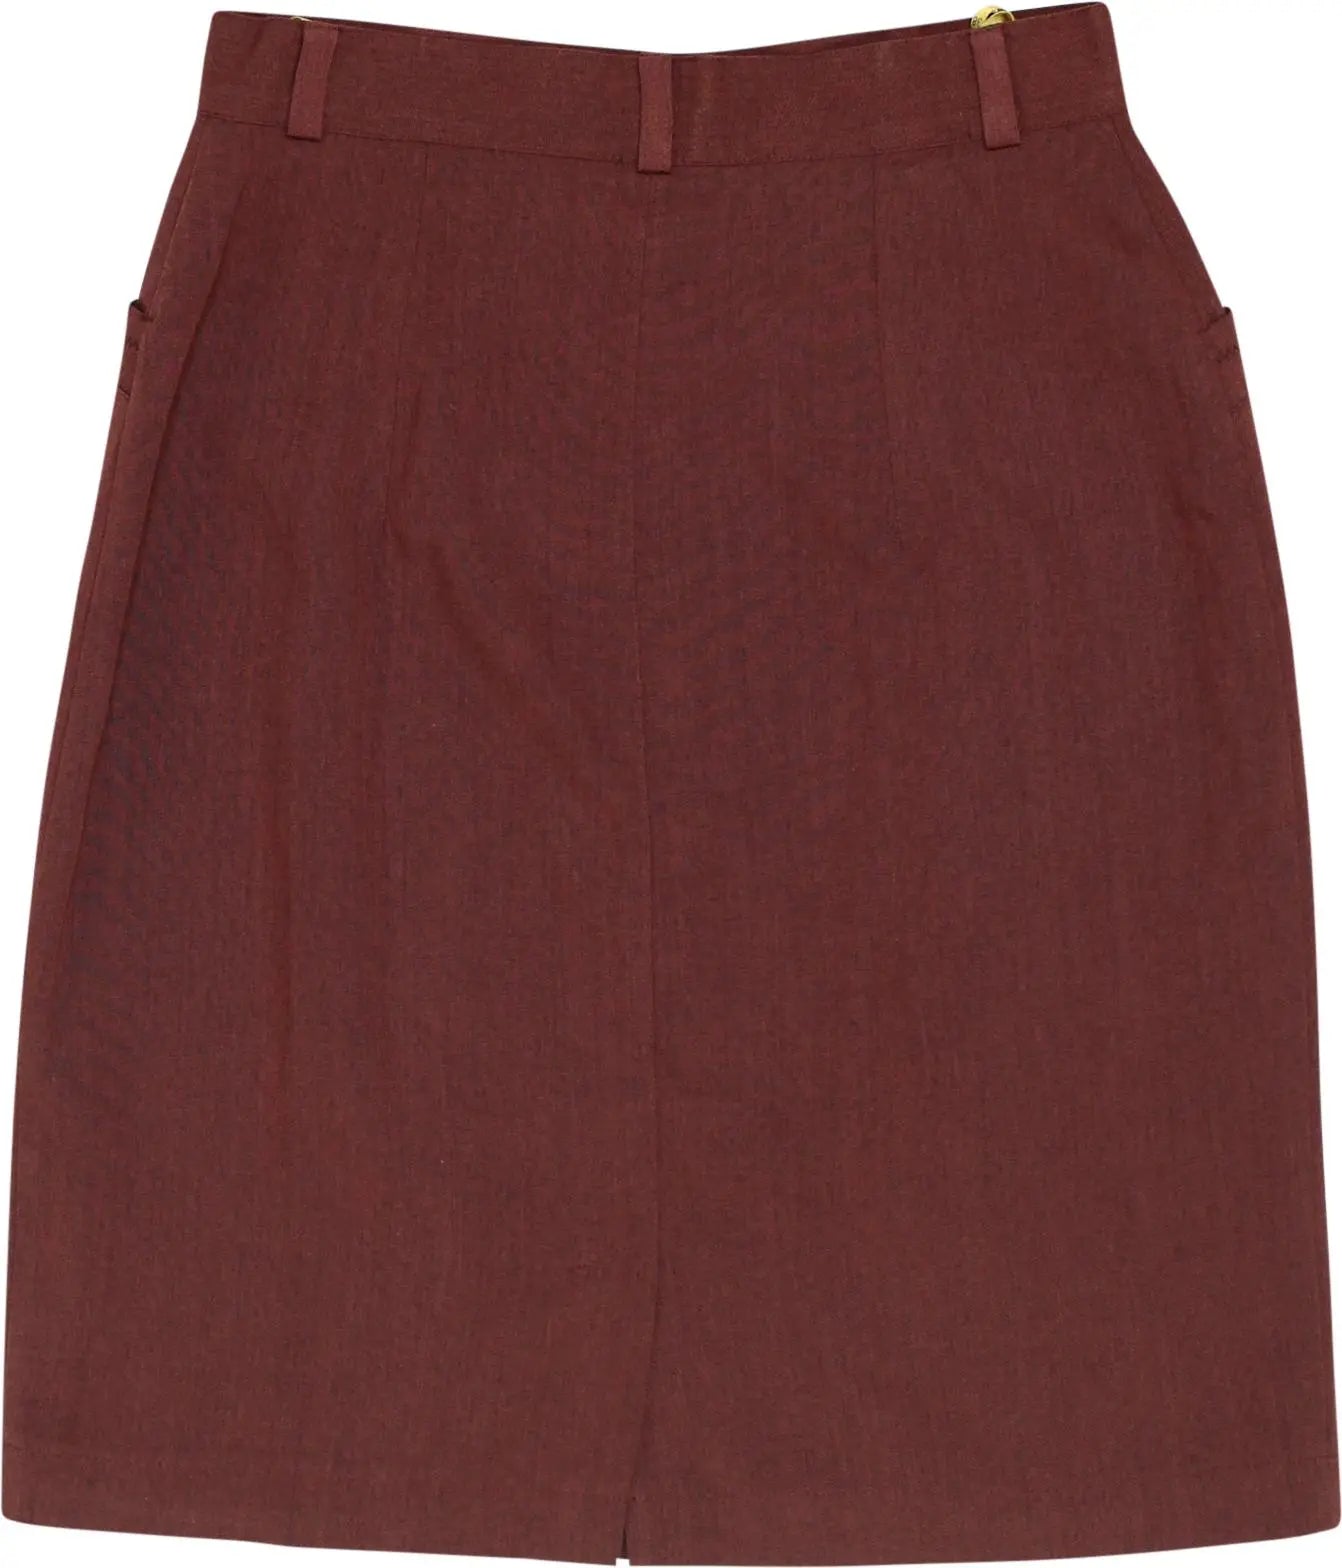 Miss Etam - Short Skirt- ThriftTale.com - Vintage and second handclothing